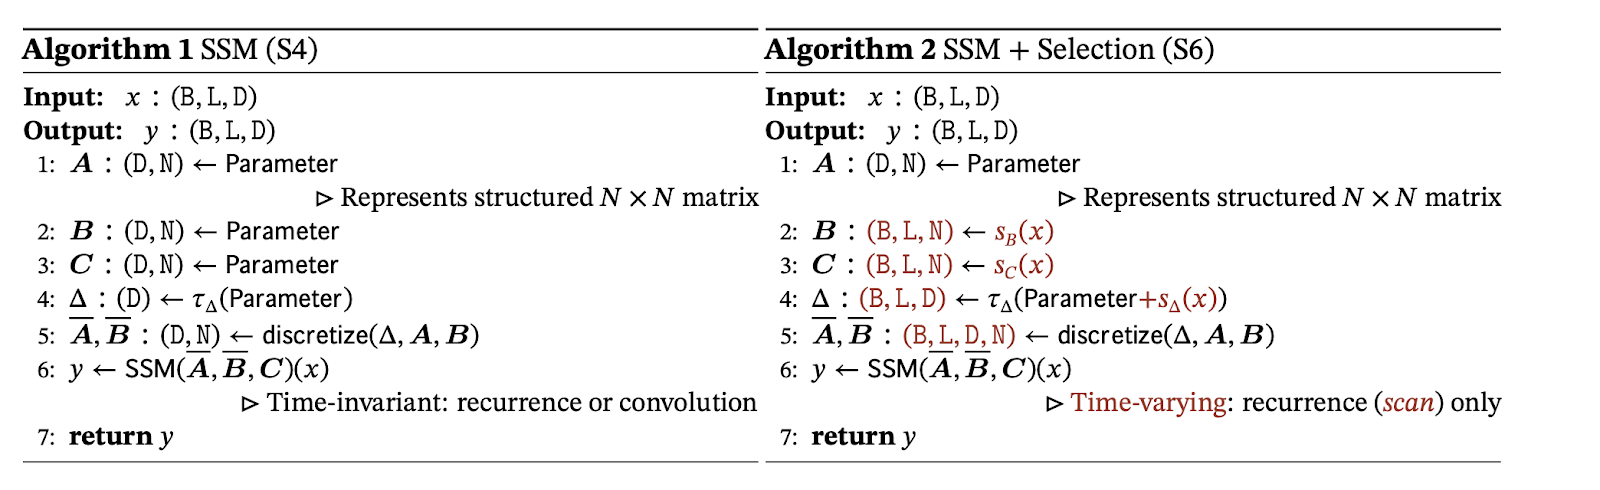 SSM Algorithm